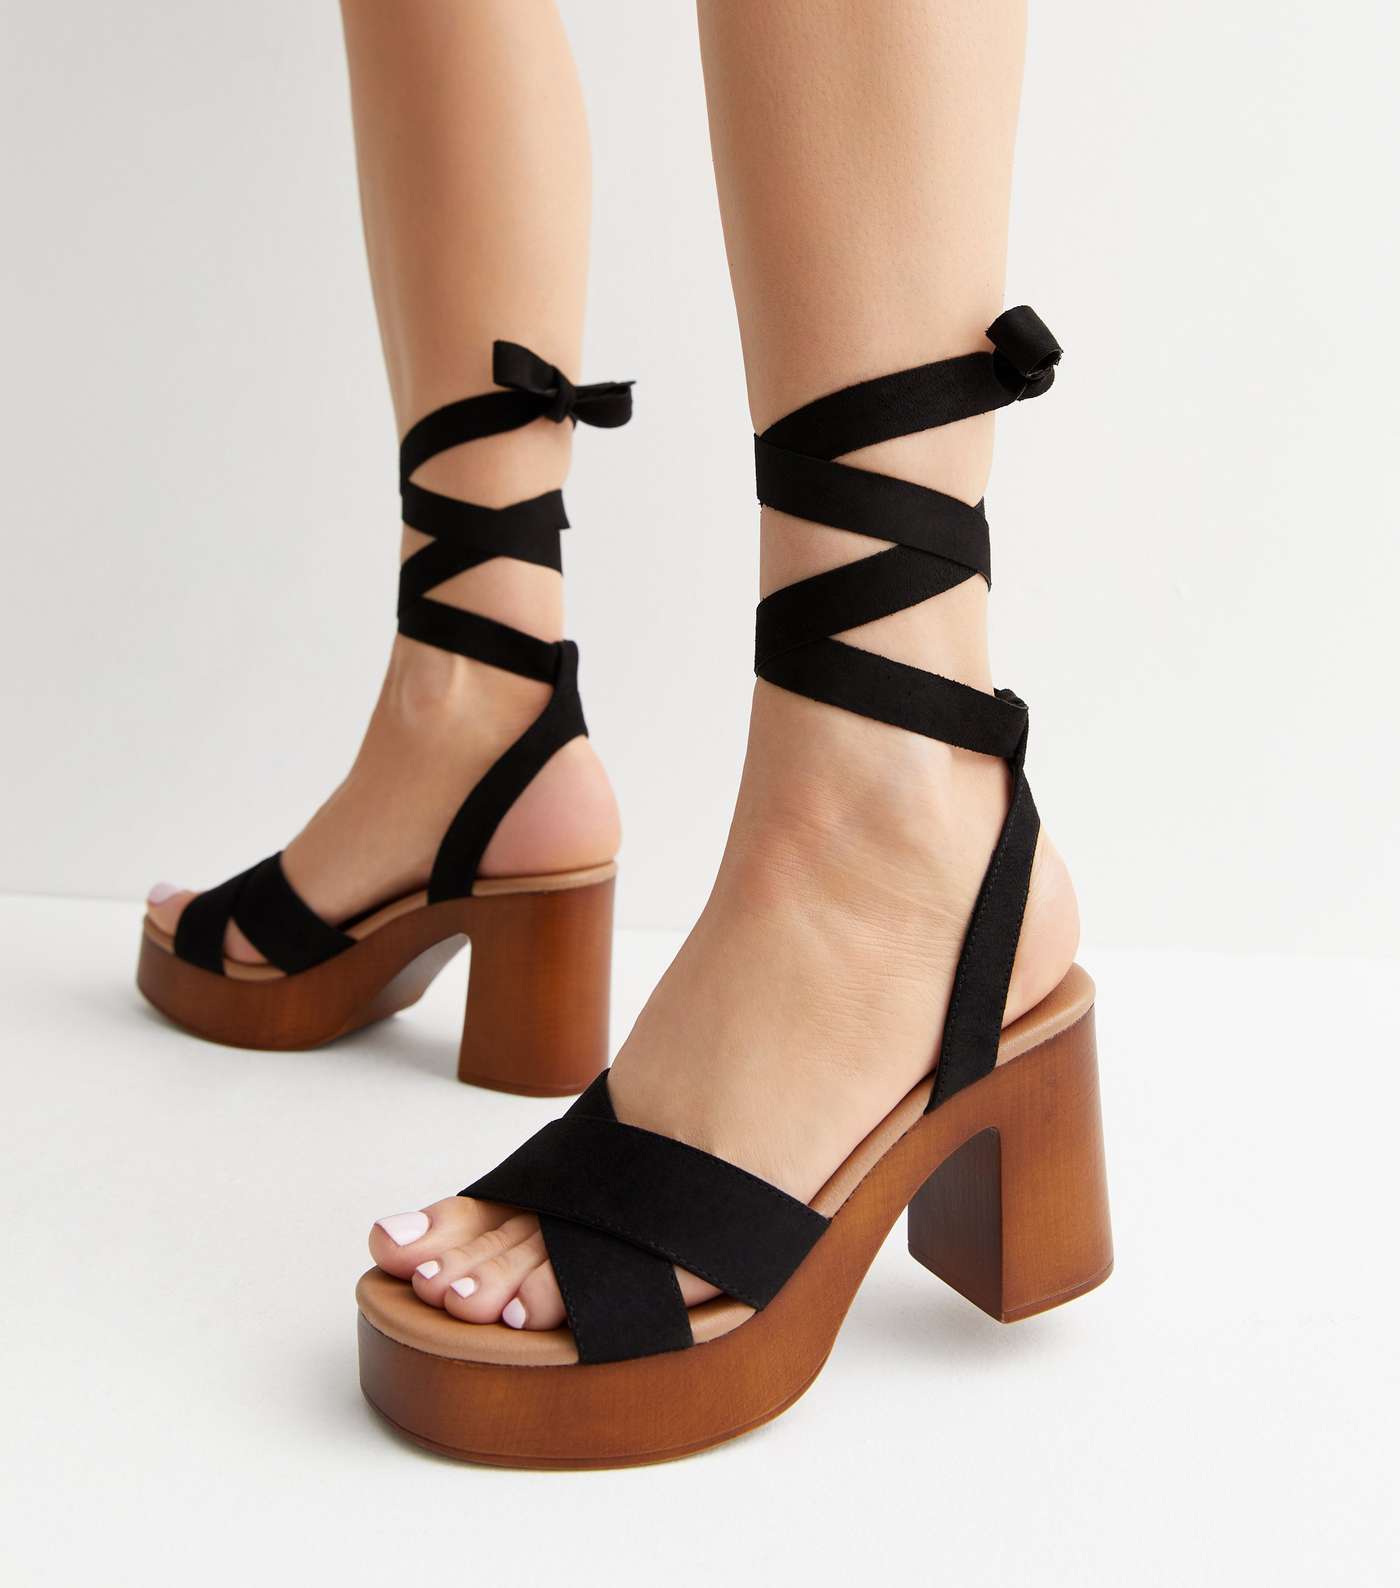 Black Suedette Ankle Tie Platform Sandals Image 2